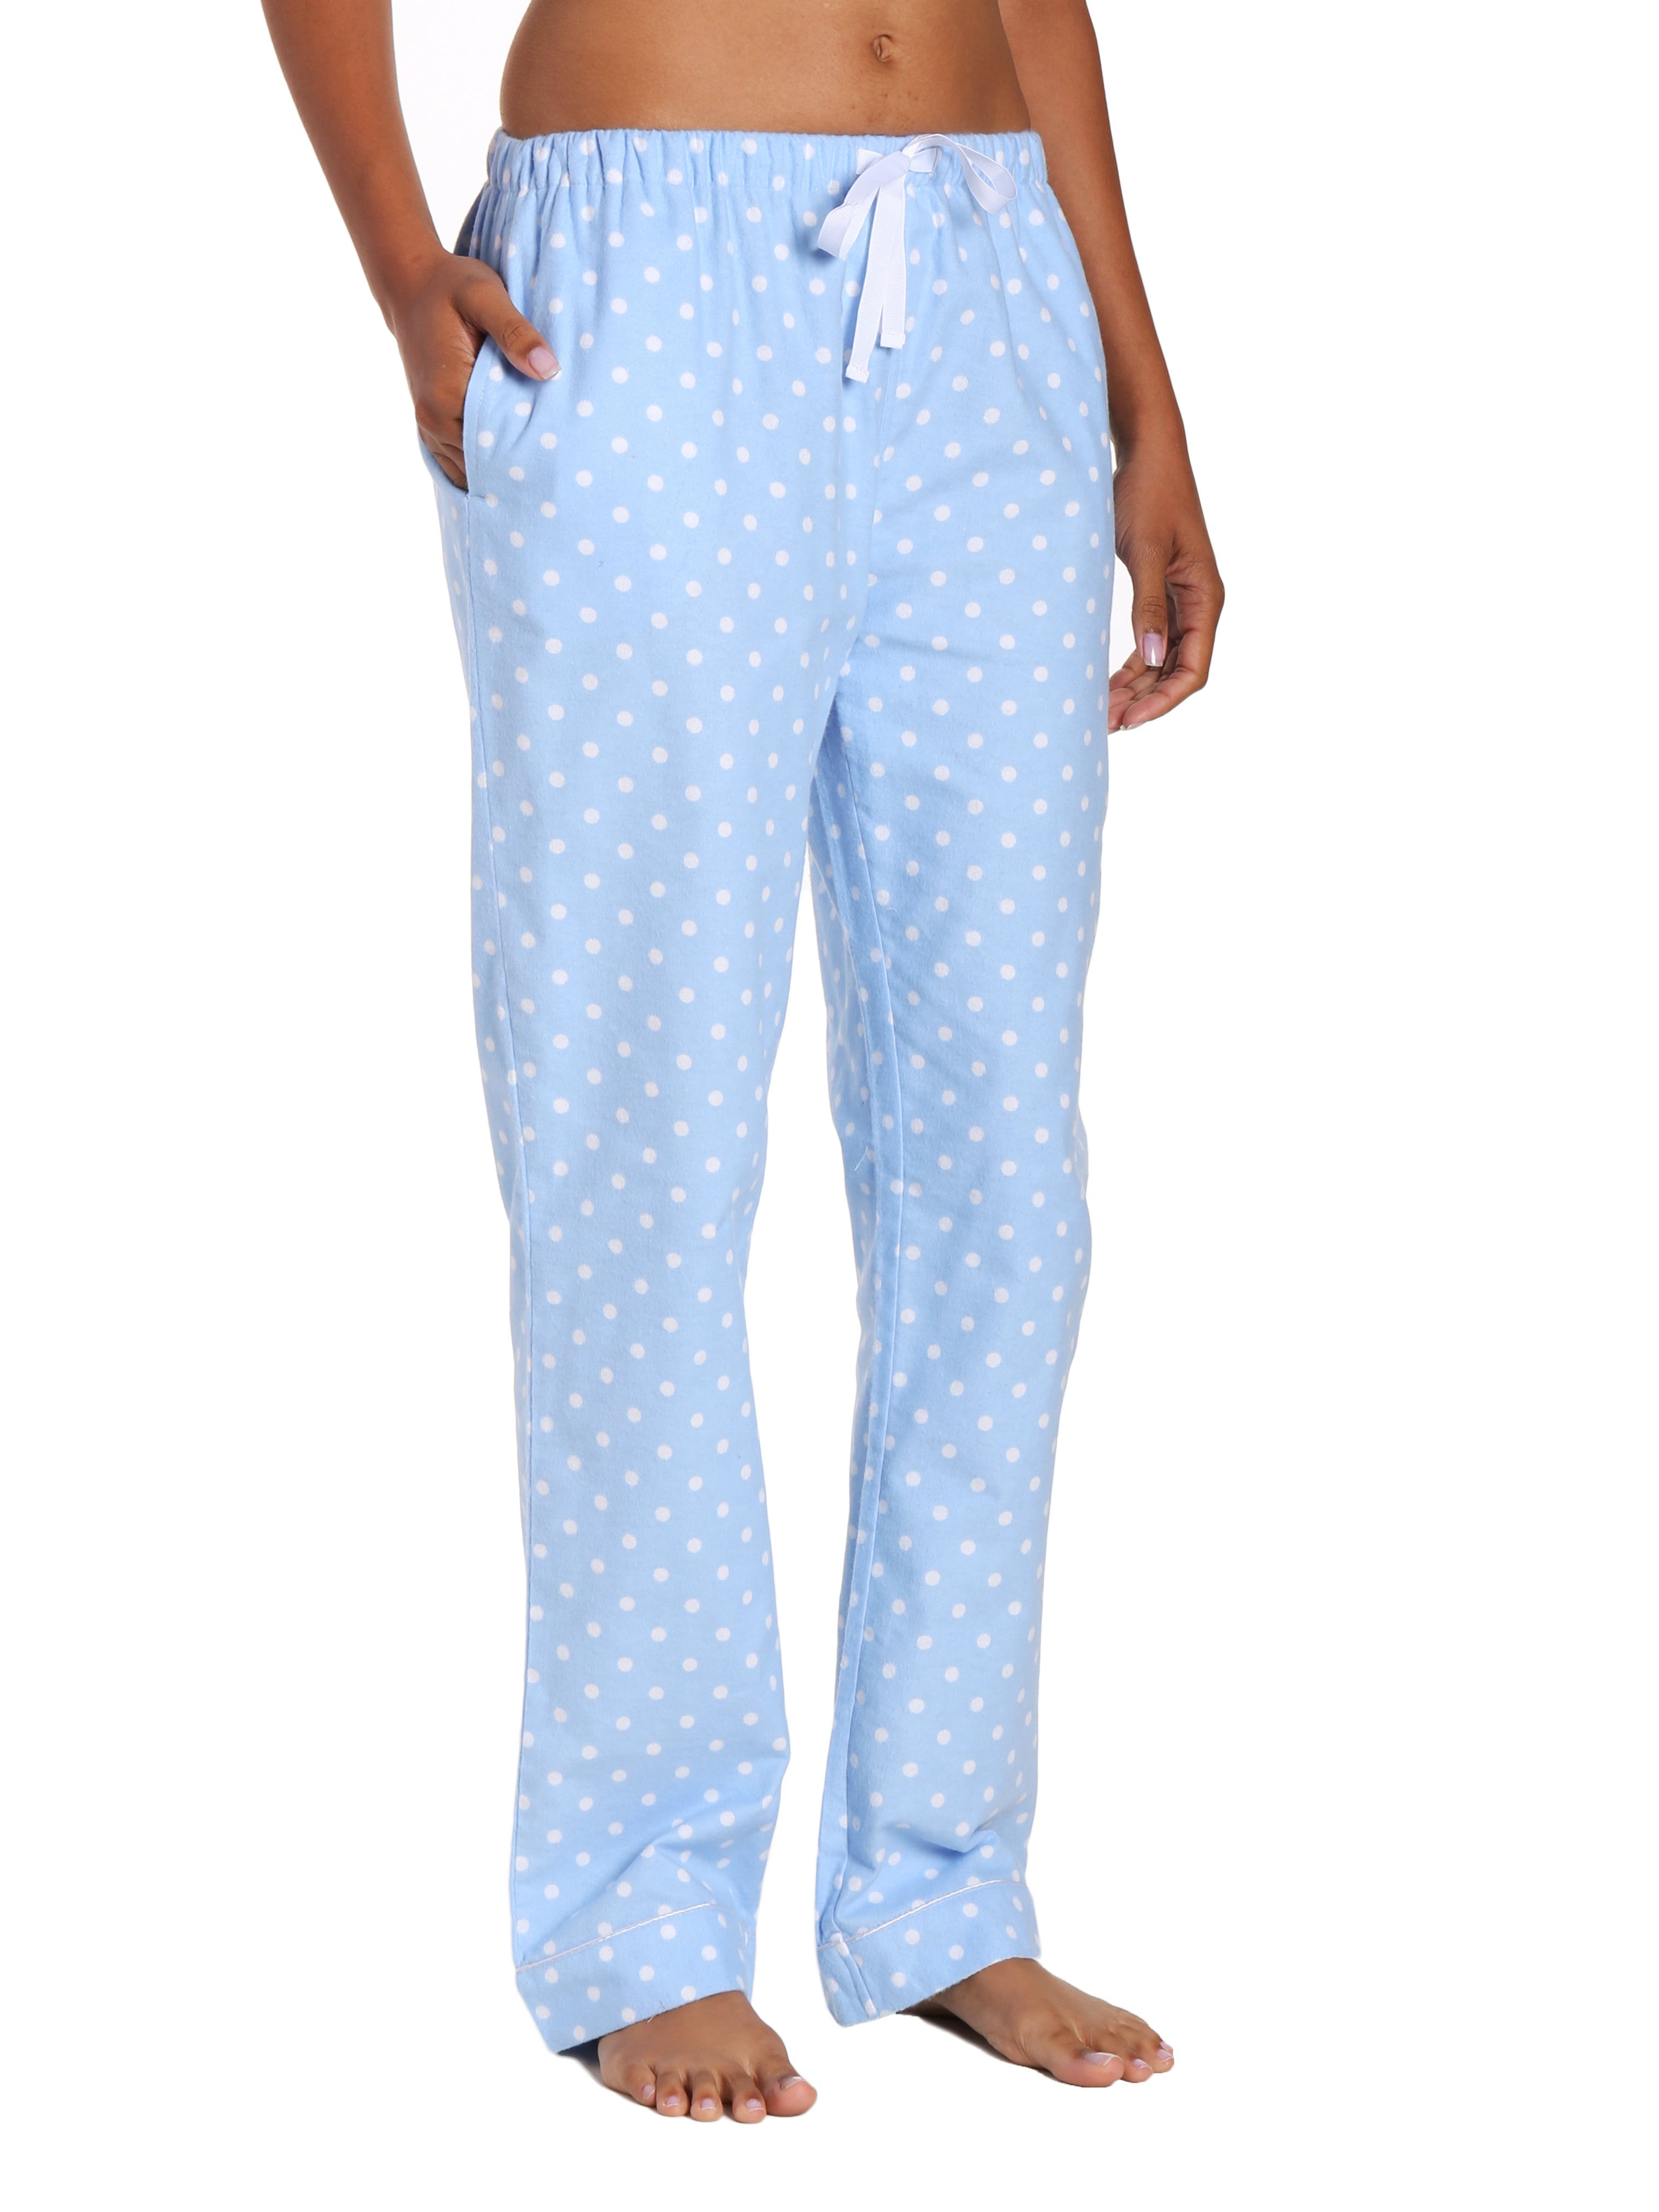 Womens 100% Cotton Flannel Lounge Pants - Dots Diva Blue-White